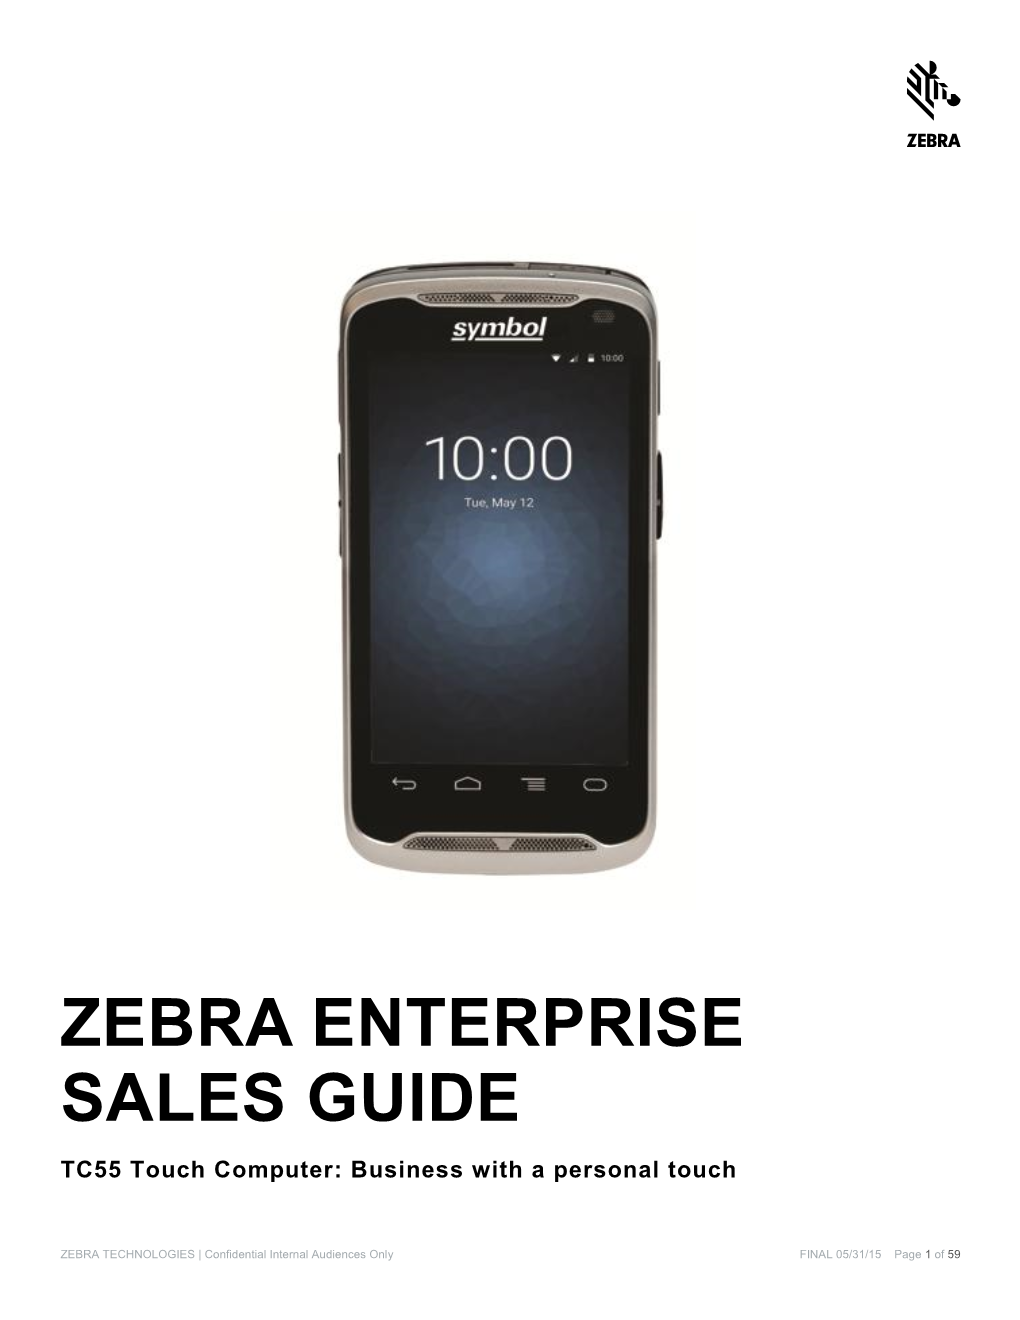 Zebra Enterprise Sales Guide